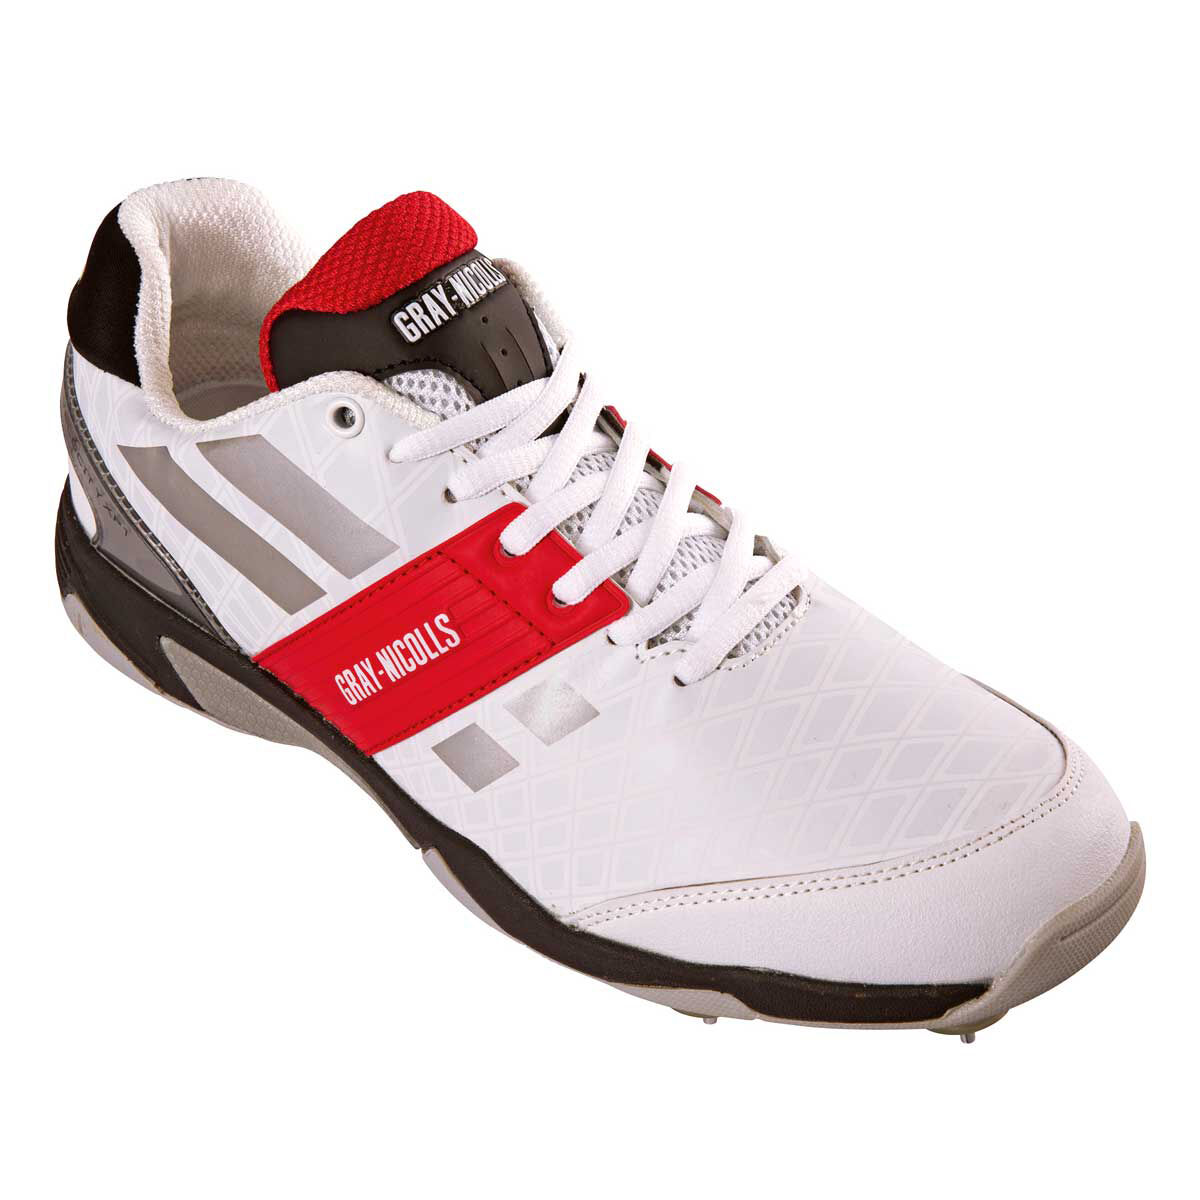 rebel sport cricket shoes